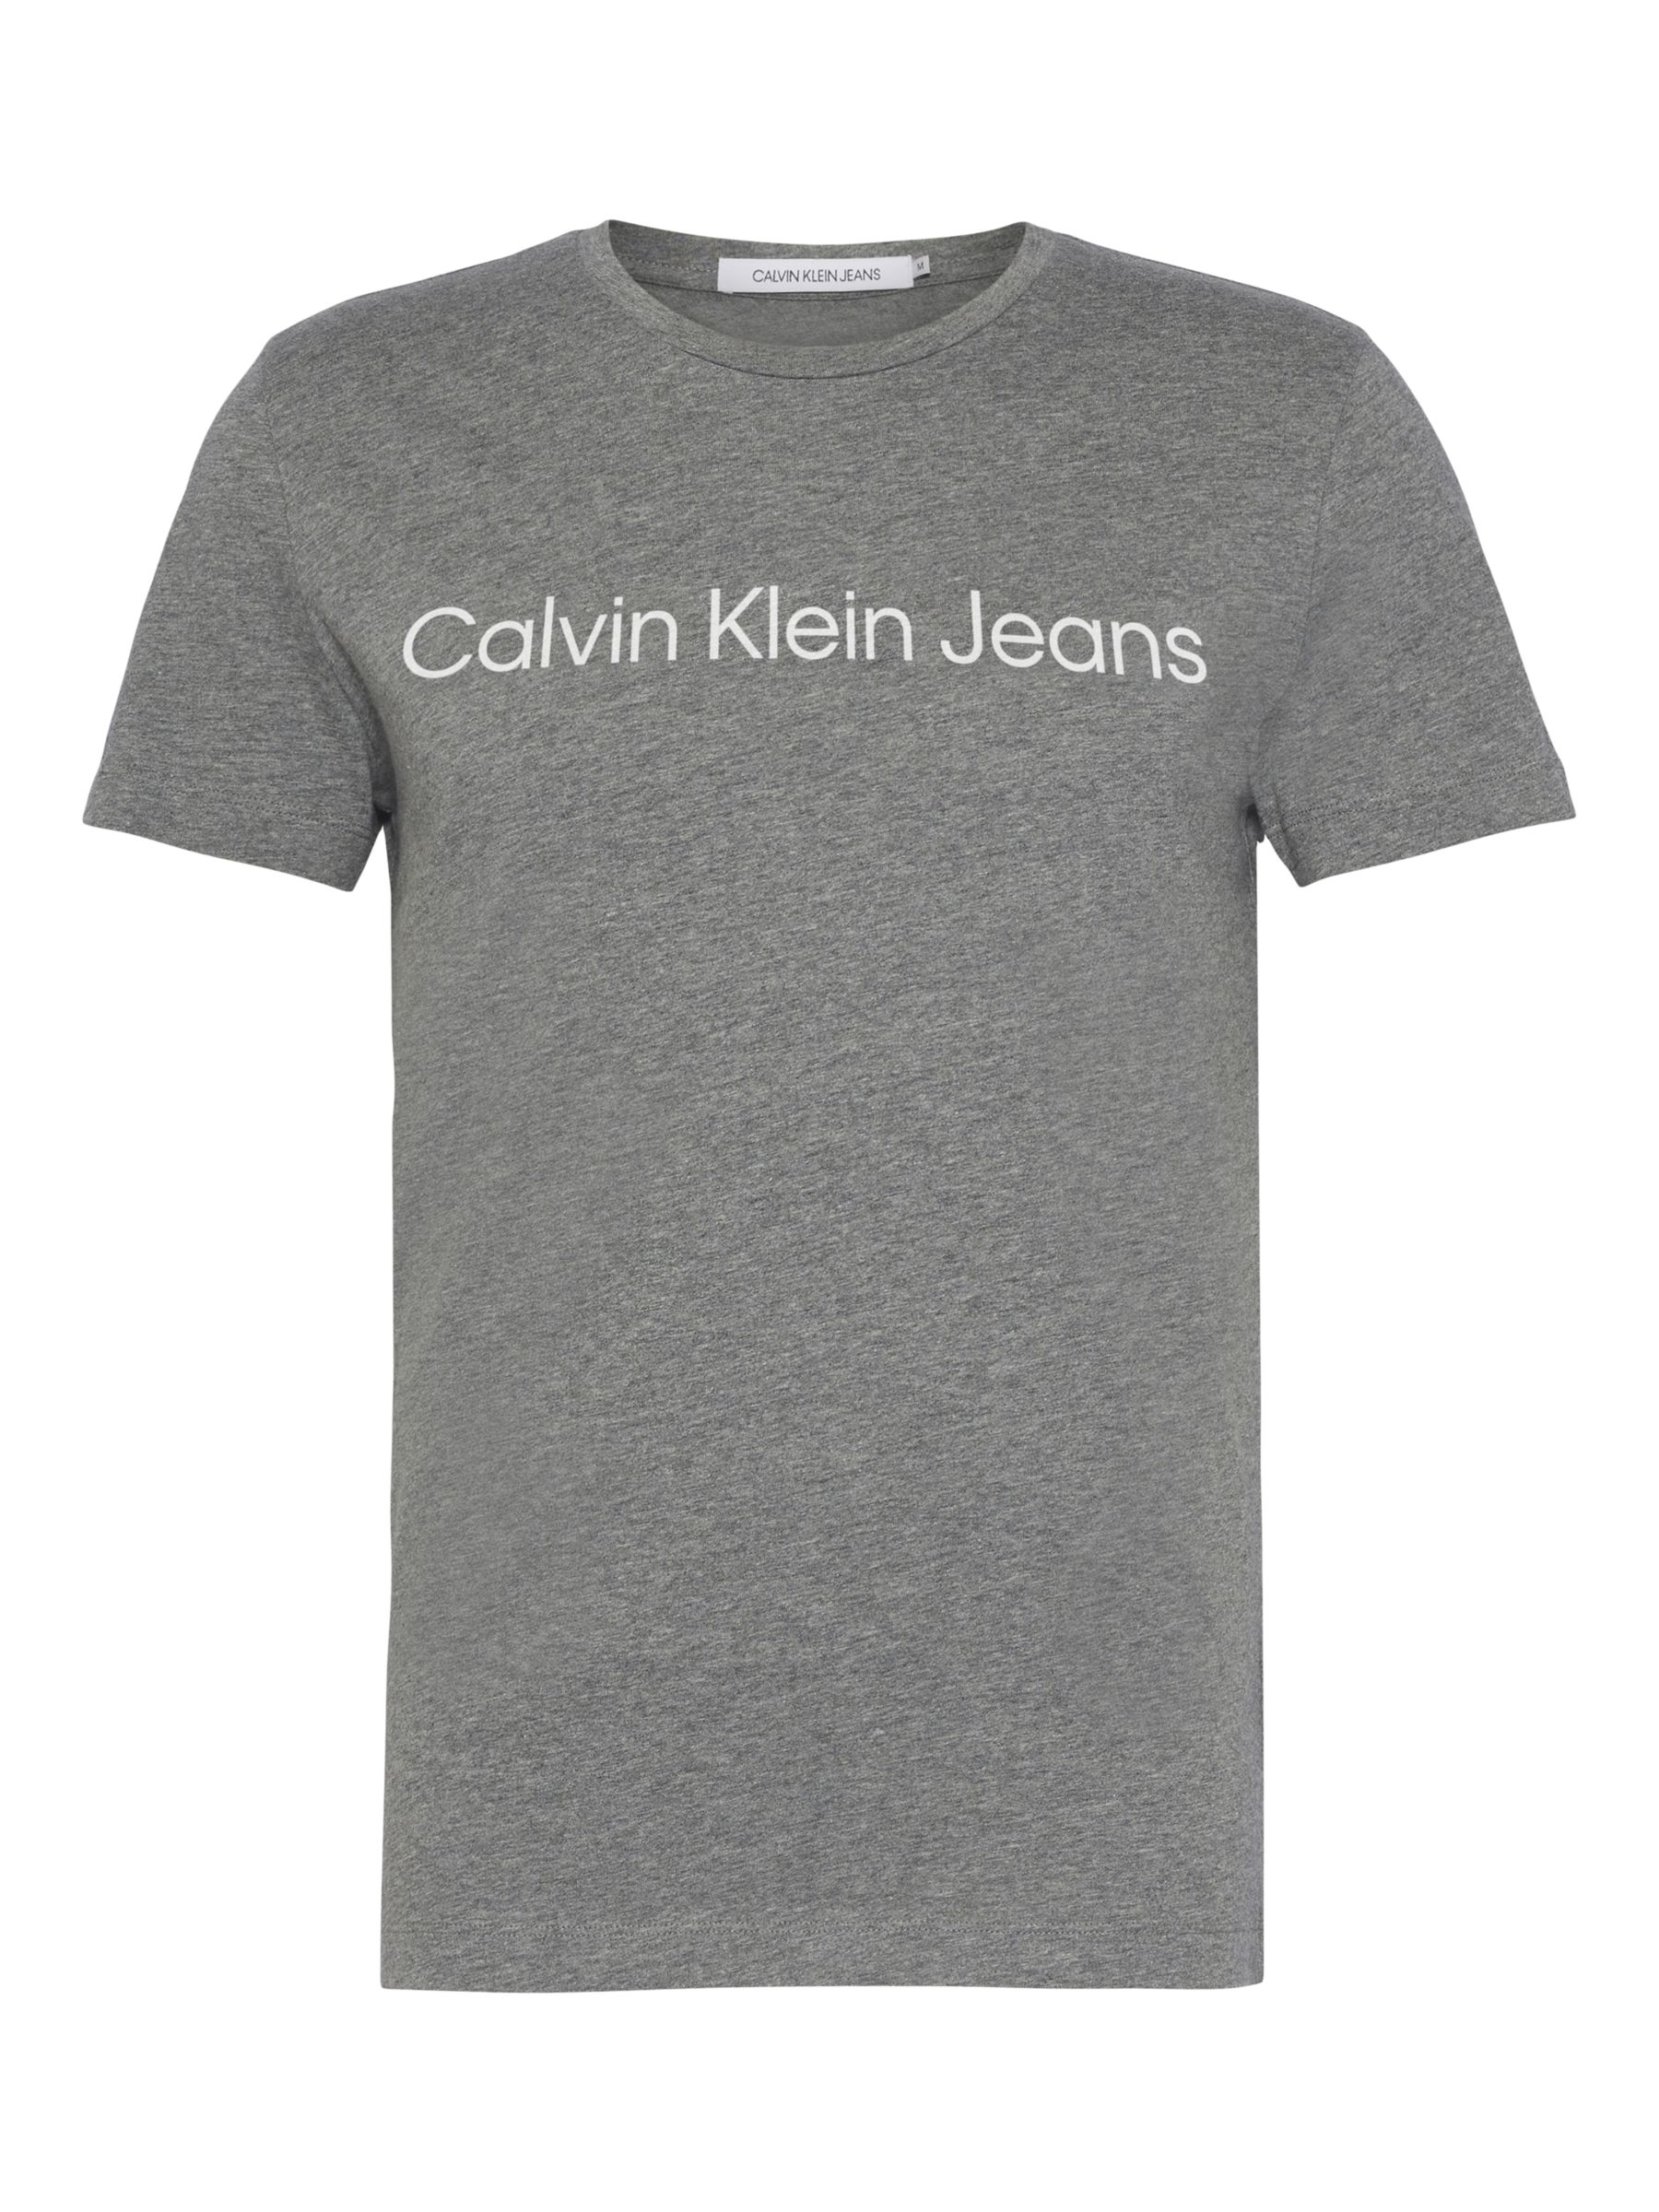 Calvin Klein Jeans Core Logo T-Shirt, Mid Grey Heather at John Lewis ...